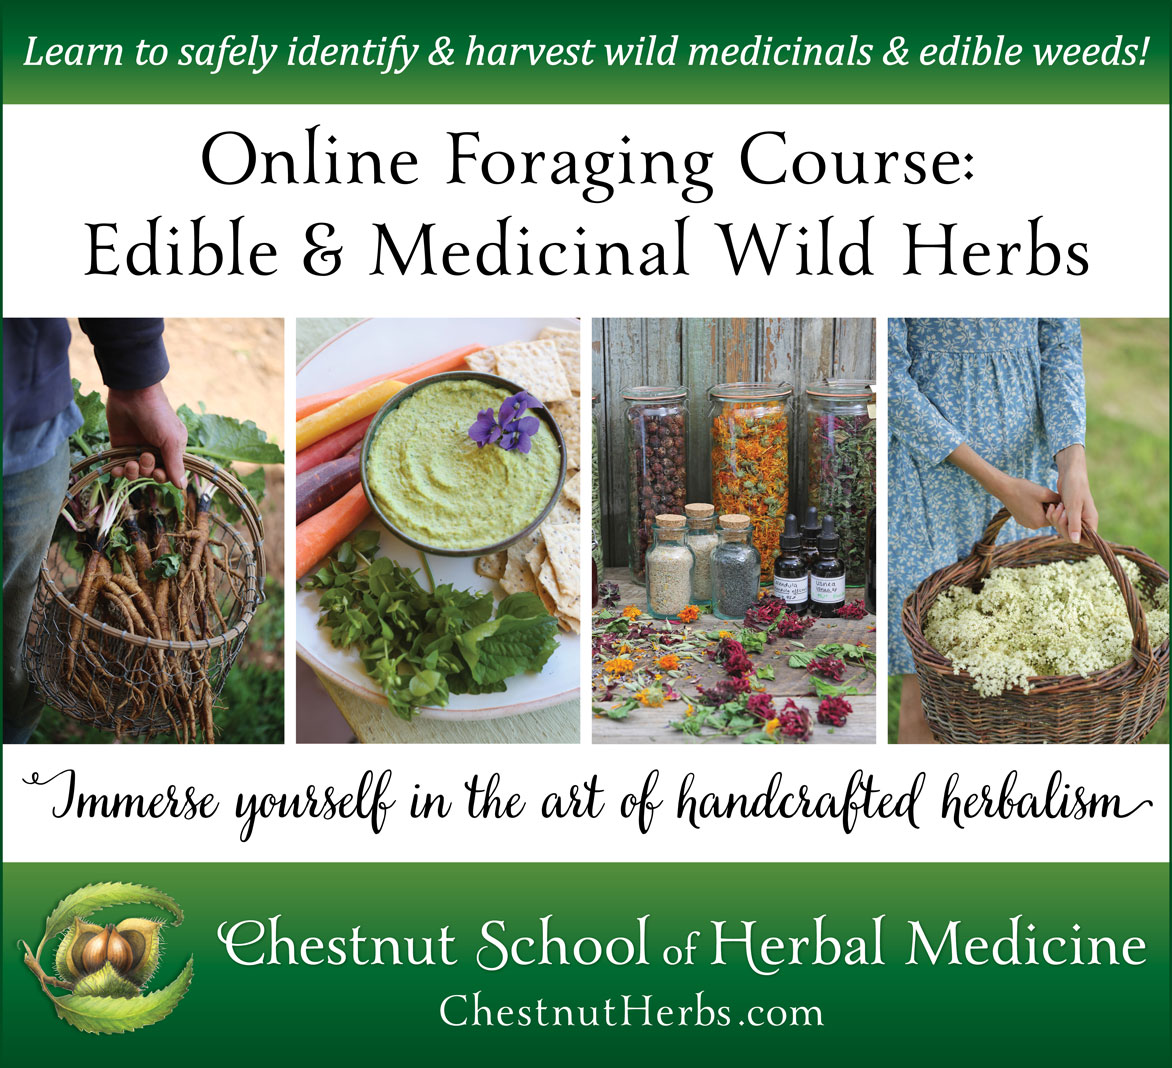 Chestnut School of Herbal Medicine's Online Foraging Course.